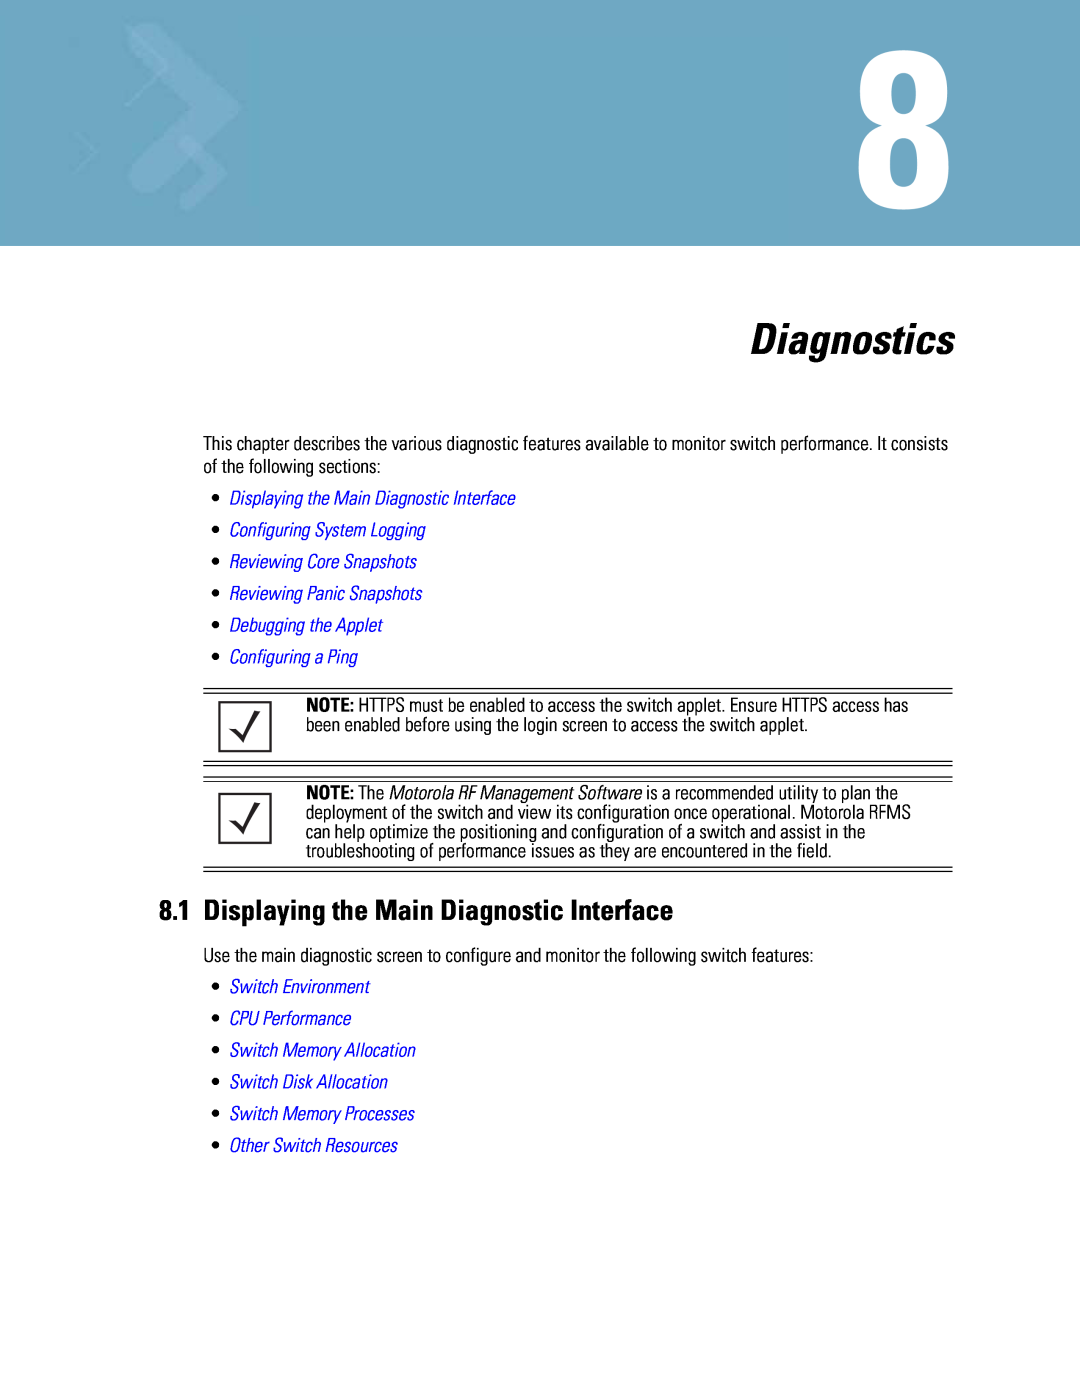 Motorola WS5100 manual Diagnostics, •Displaying the Main Diagnostic Interface, •Configuring System Logging 